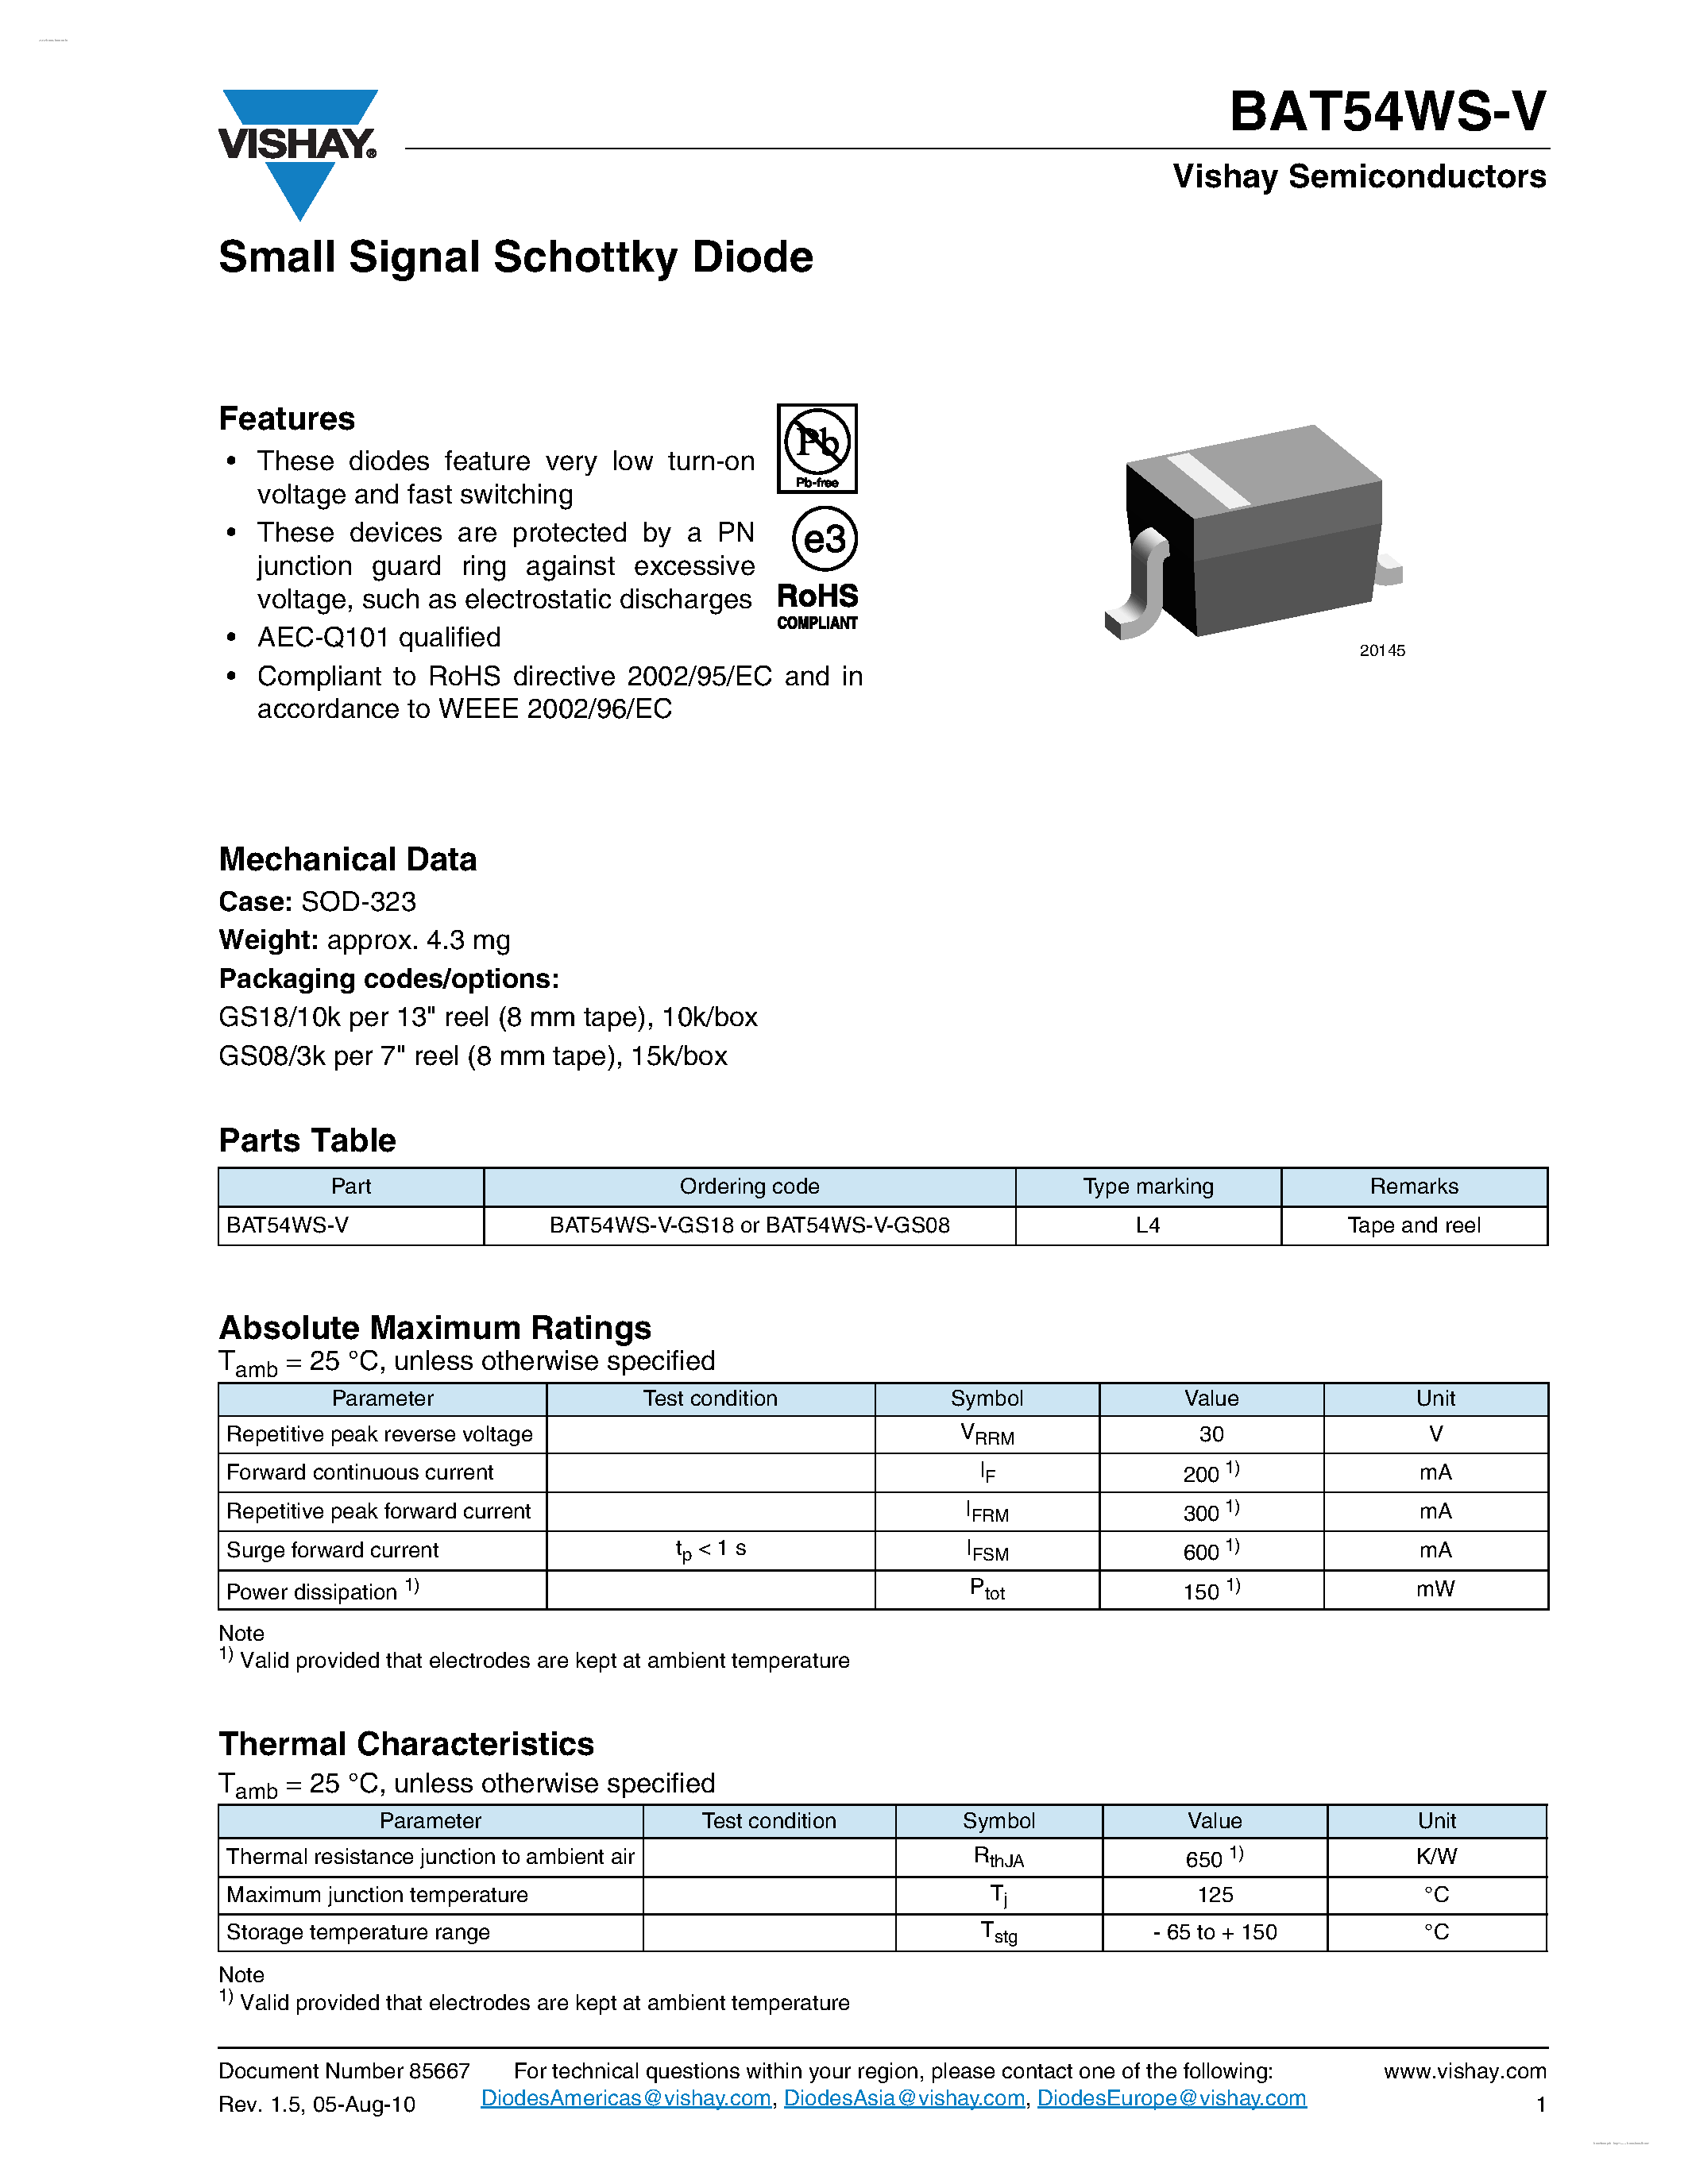 Даташит BAT54WS-V - Small Signal Schottky Diodes страница 1